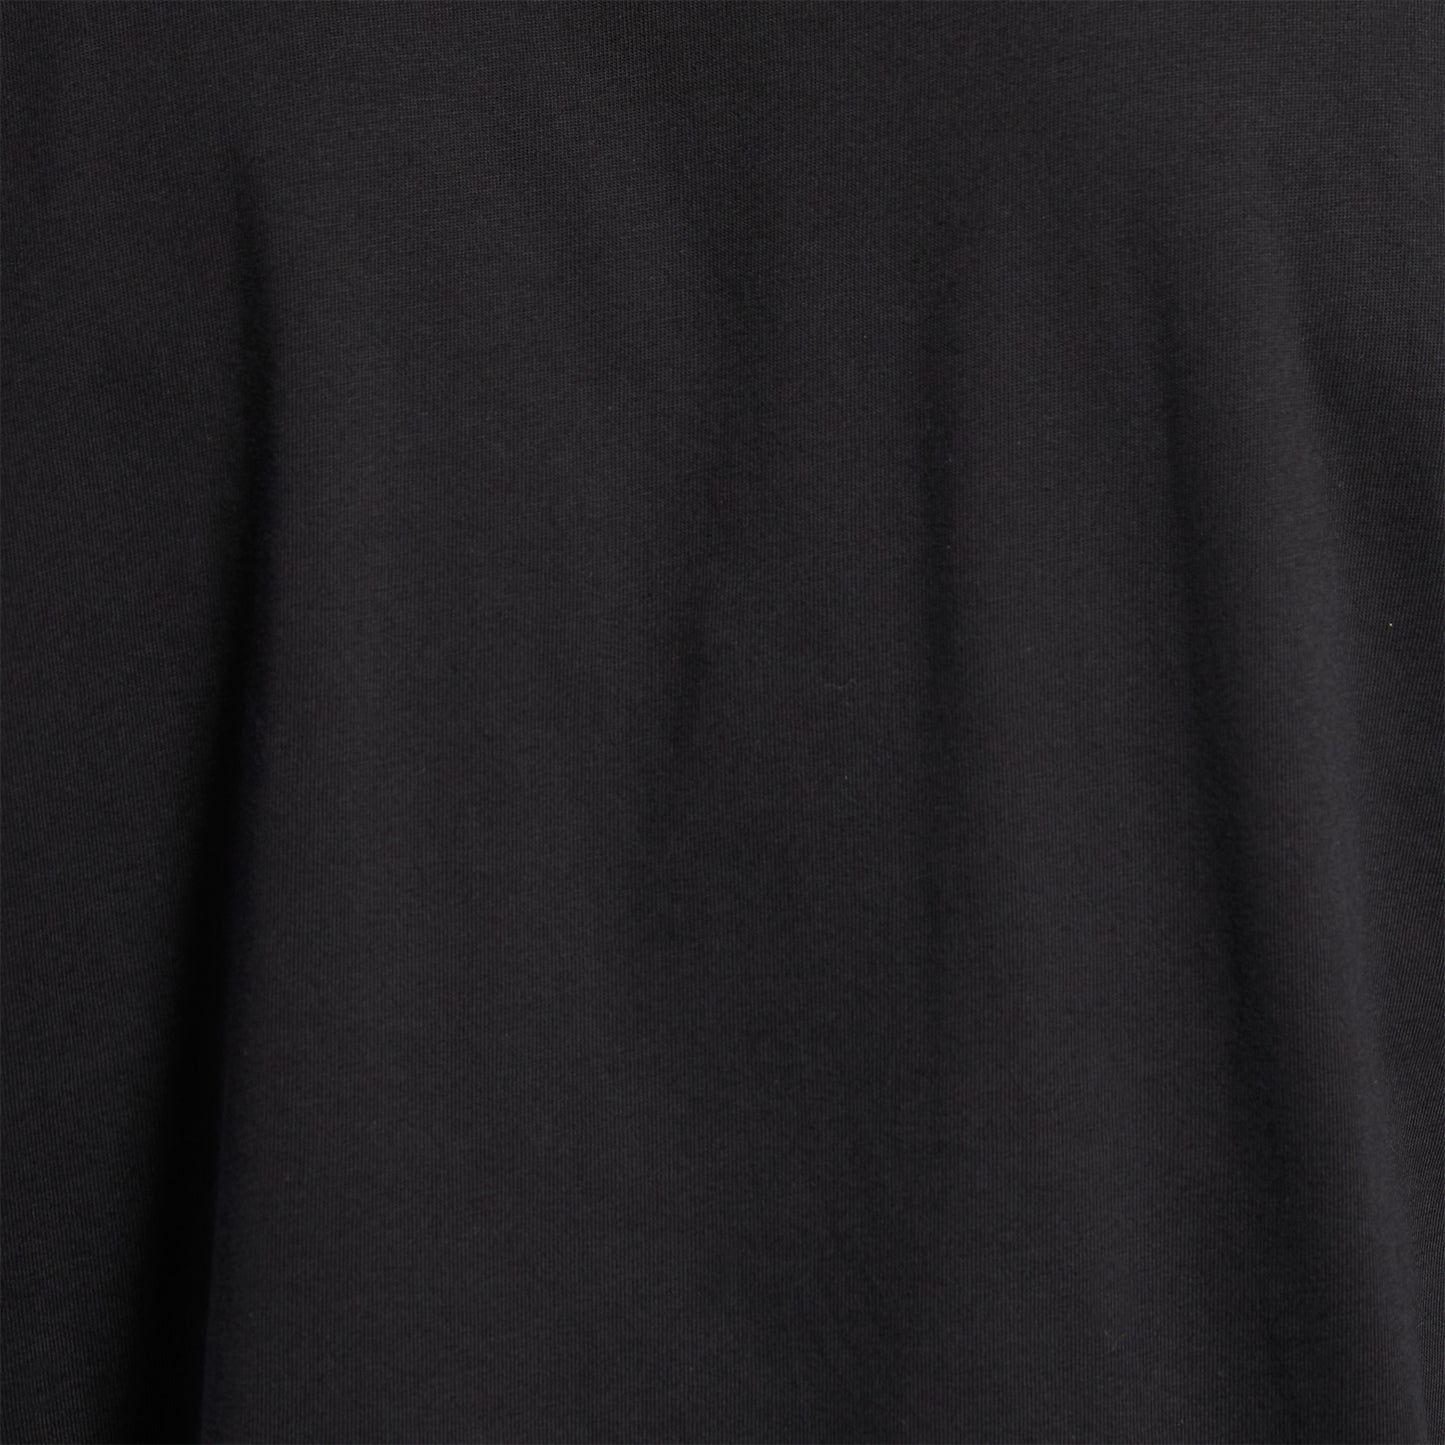 Reebok Apparel Men Classics Wardrobe Essentials Long-Sleeve Top T-Long-Sleeve Top Black